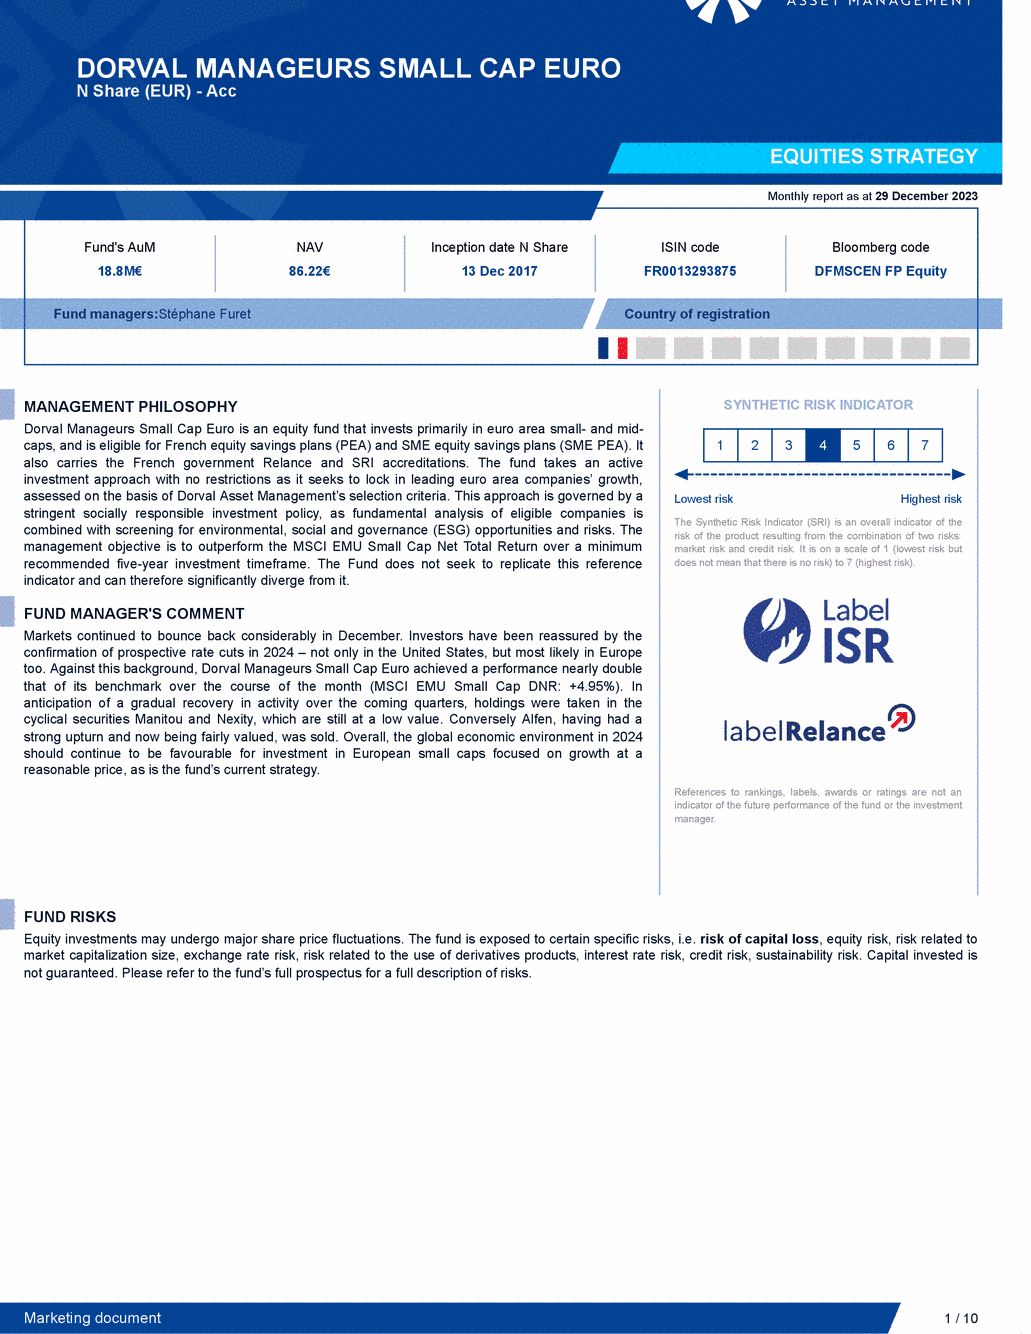 Reporting DORVAL MANAGEURS SMALL CAP EURO N - 29/12/2023 - Anglais